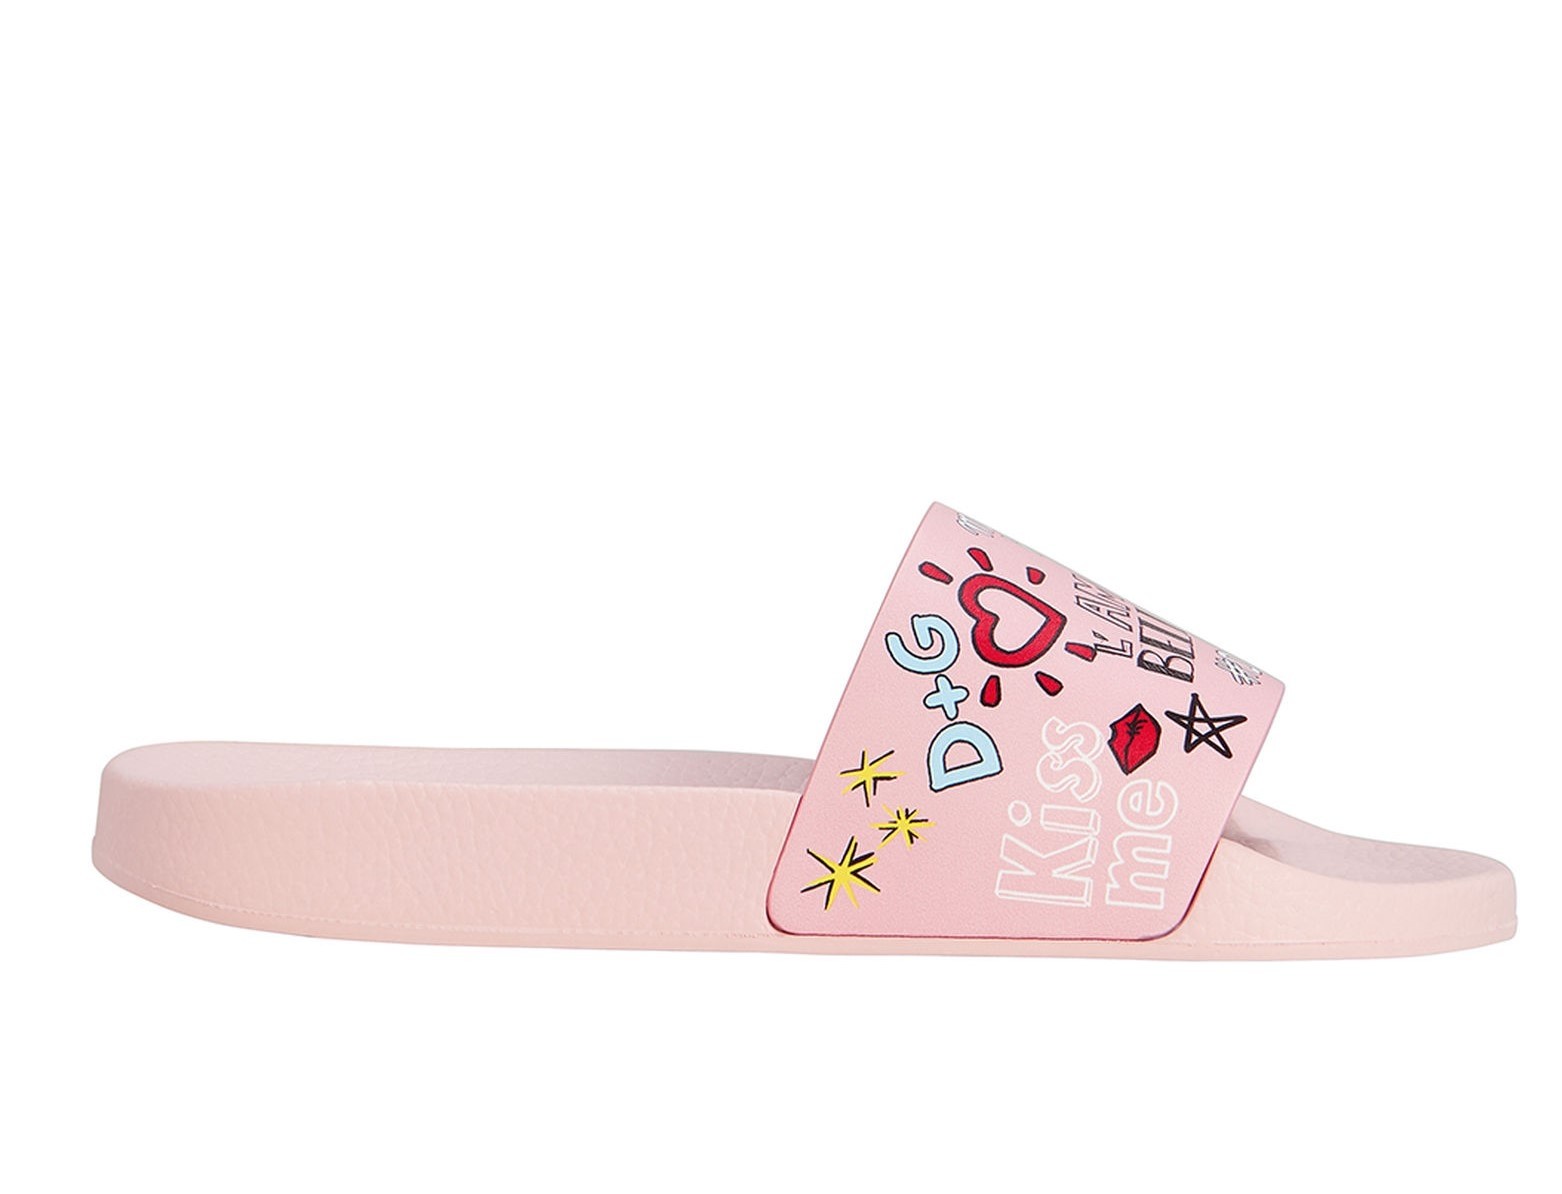 Dolce and Gabbana Dolce & Gabbana Ladies Slipper in Soft Pink and Beach Graffiti CW0047 AU602 HEP52